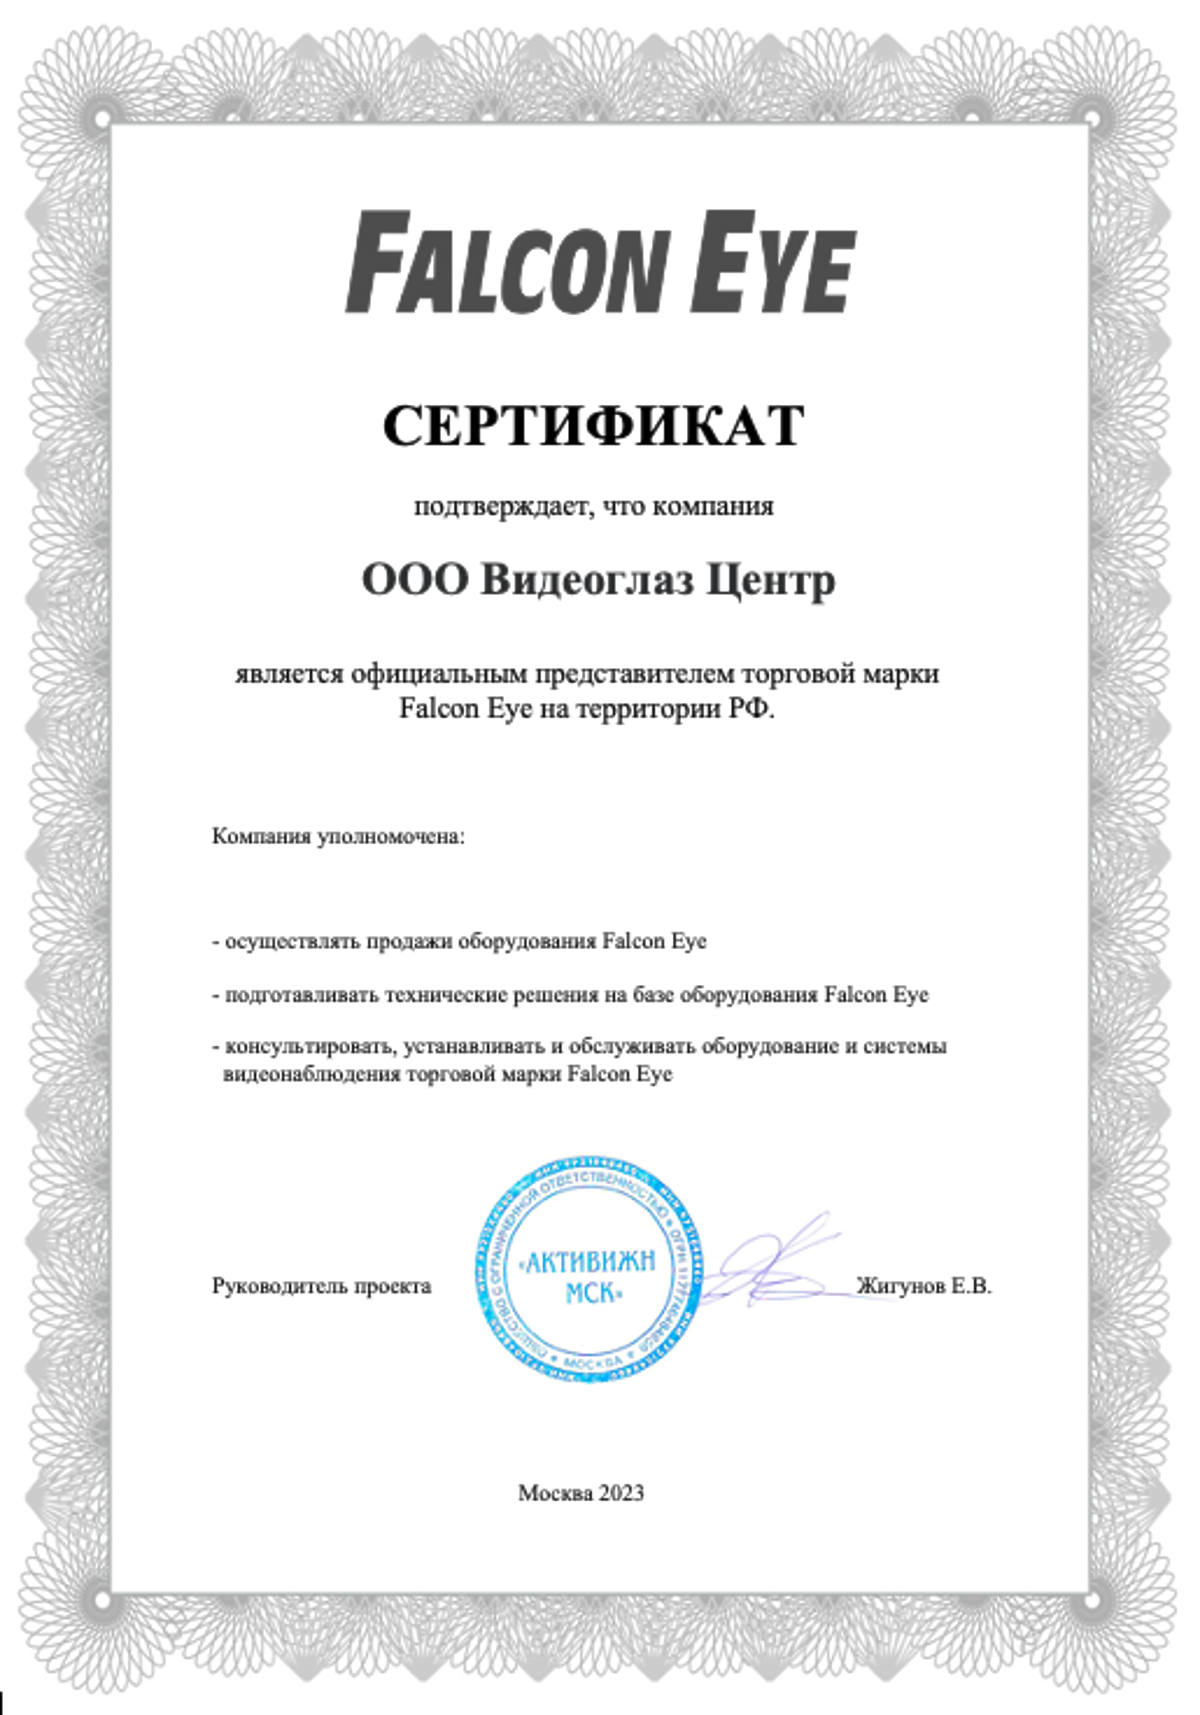 Falcon Eye сертификат